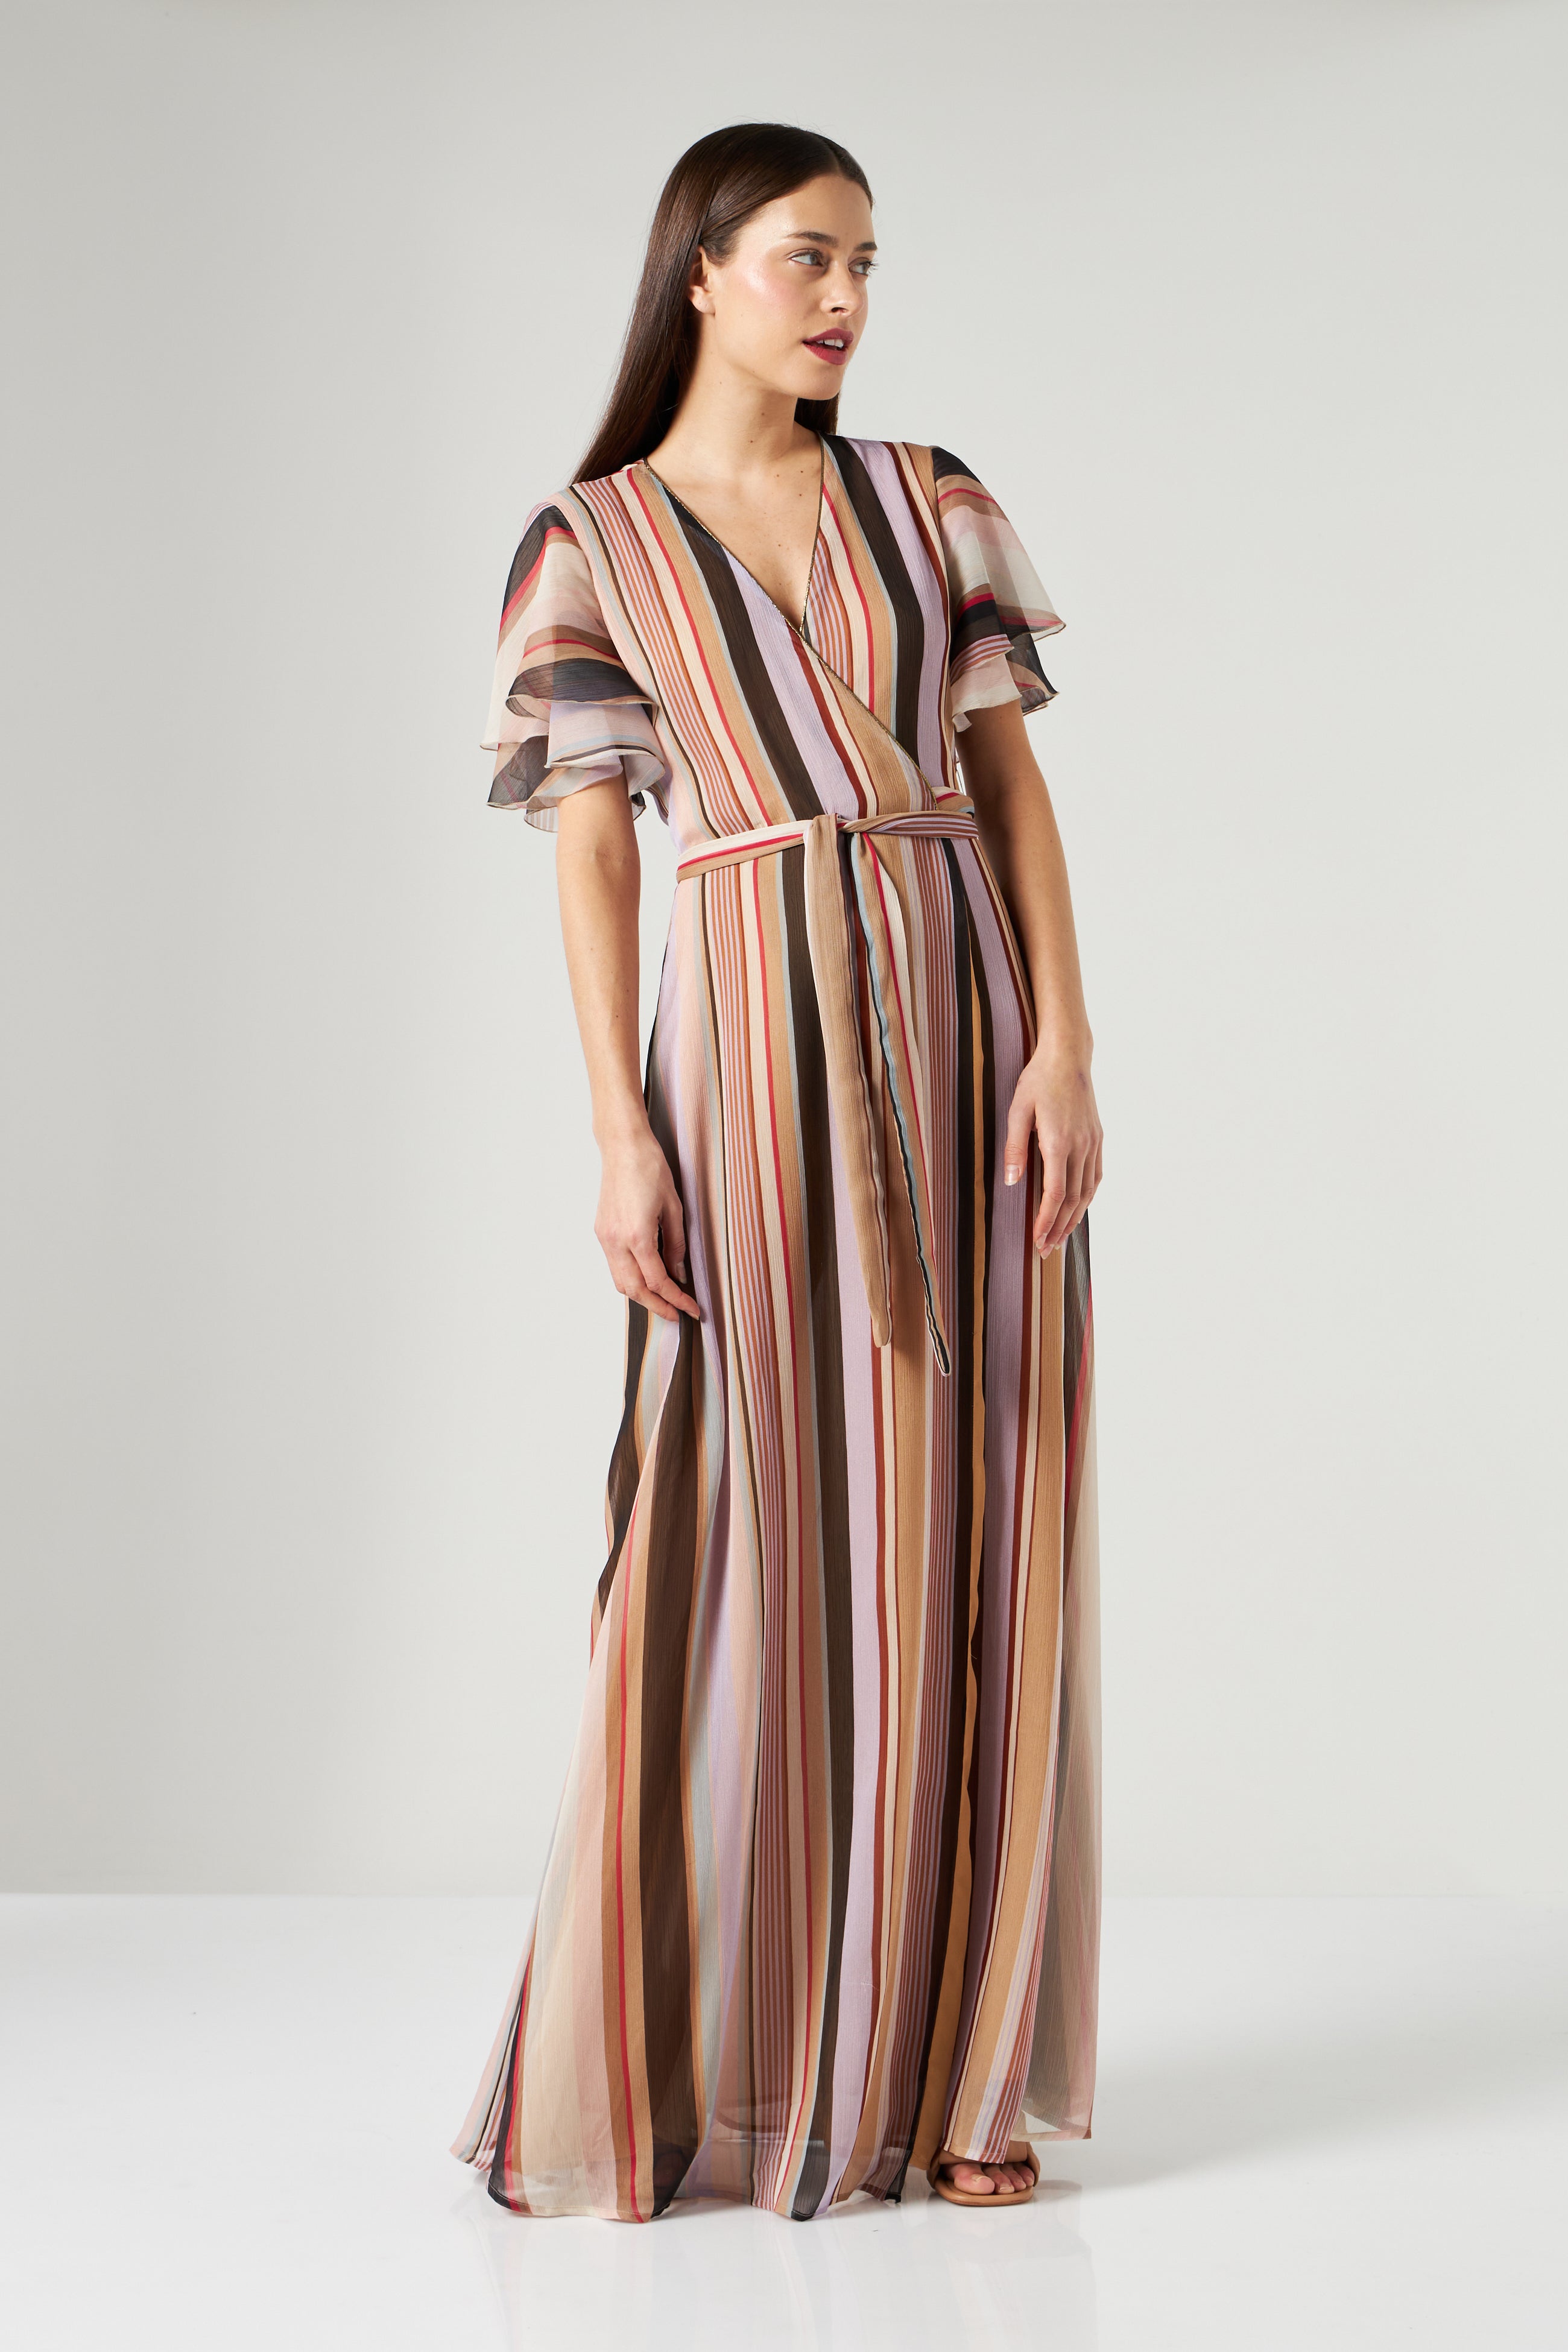 LIU JO Long Striped Dress